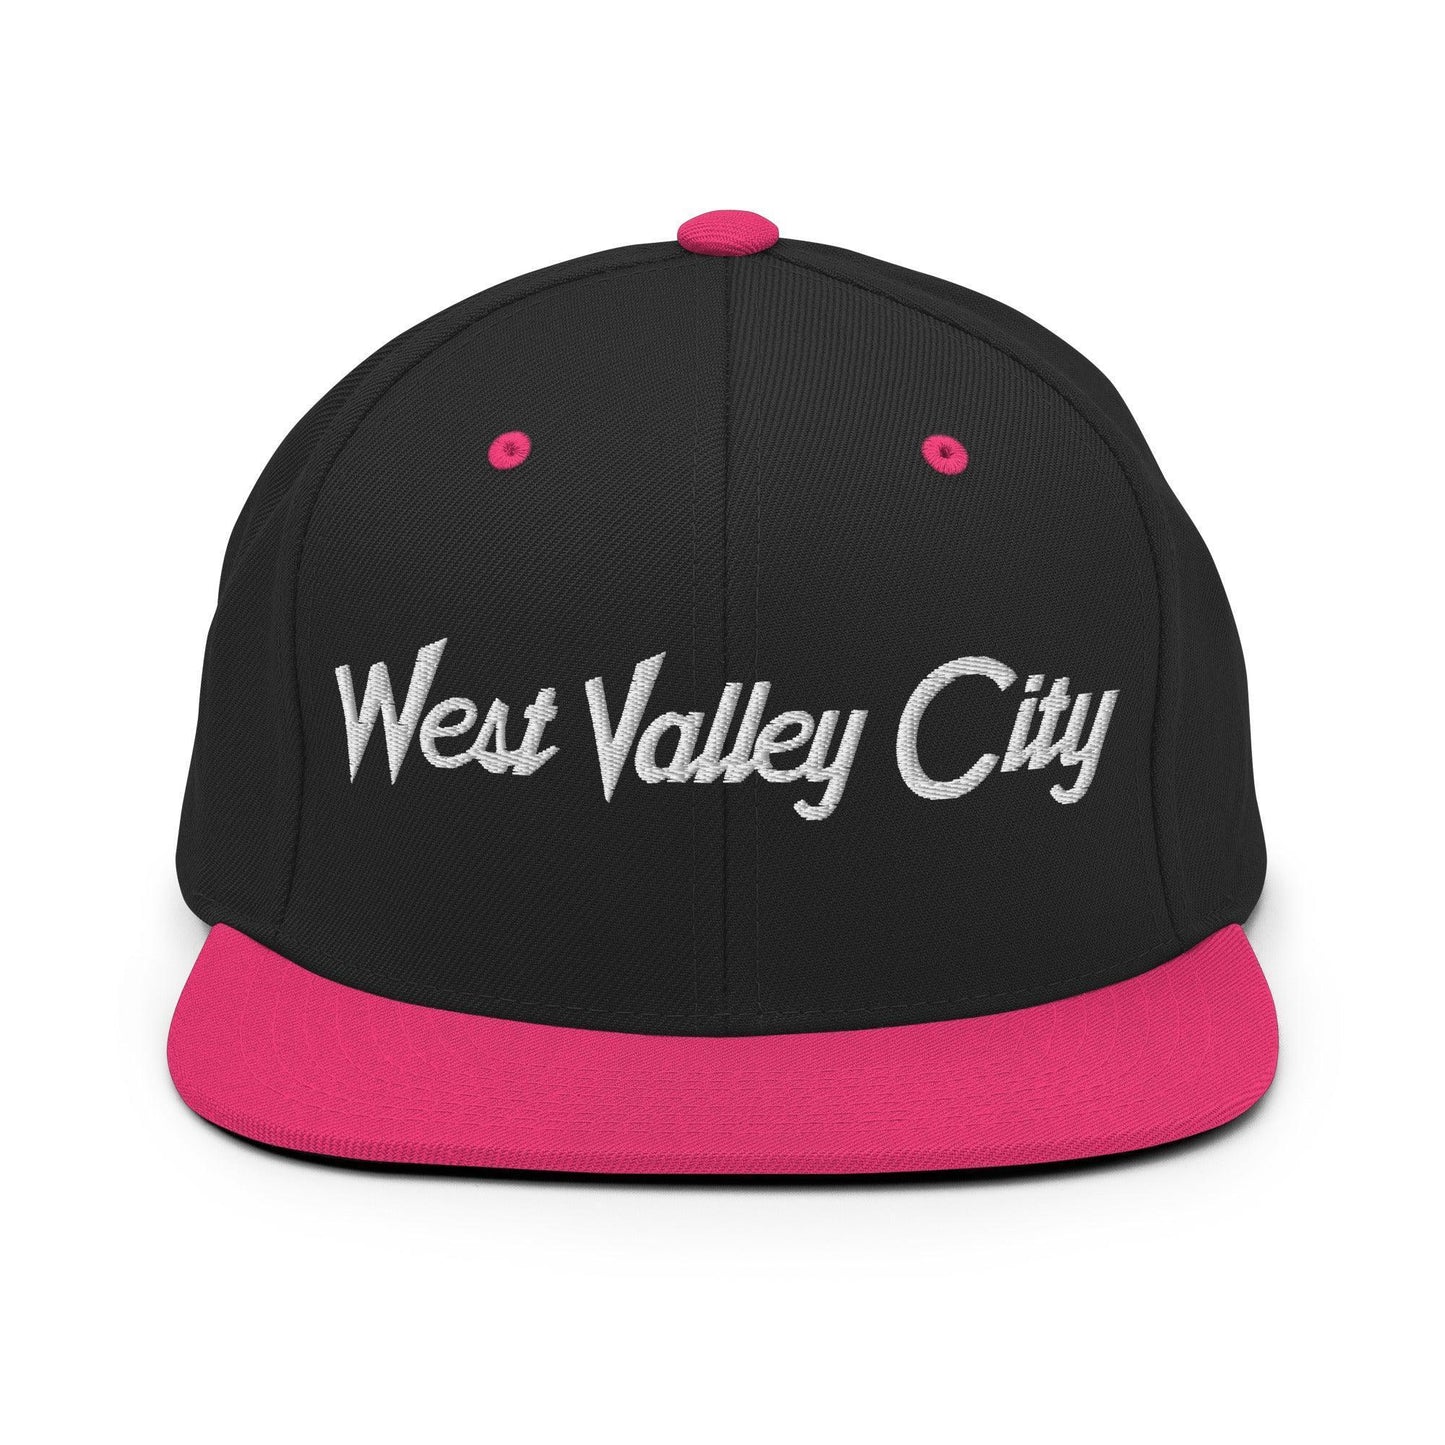 West Valley City Script Snapback Hat Black Neon Pink